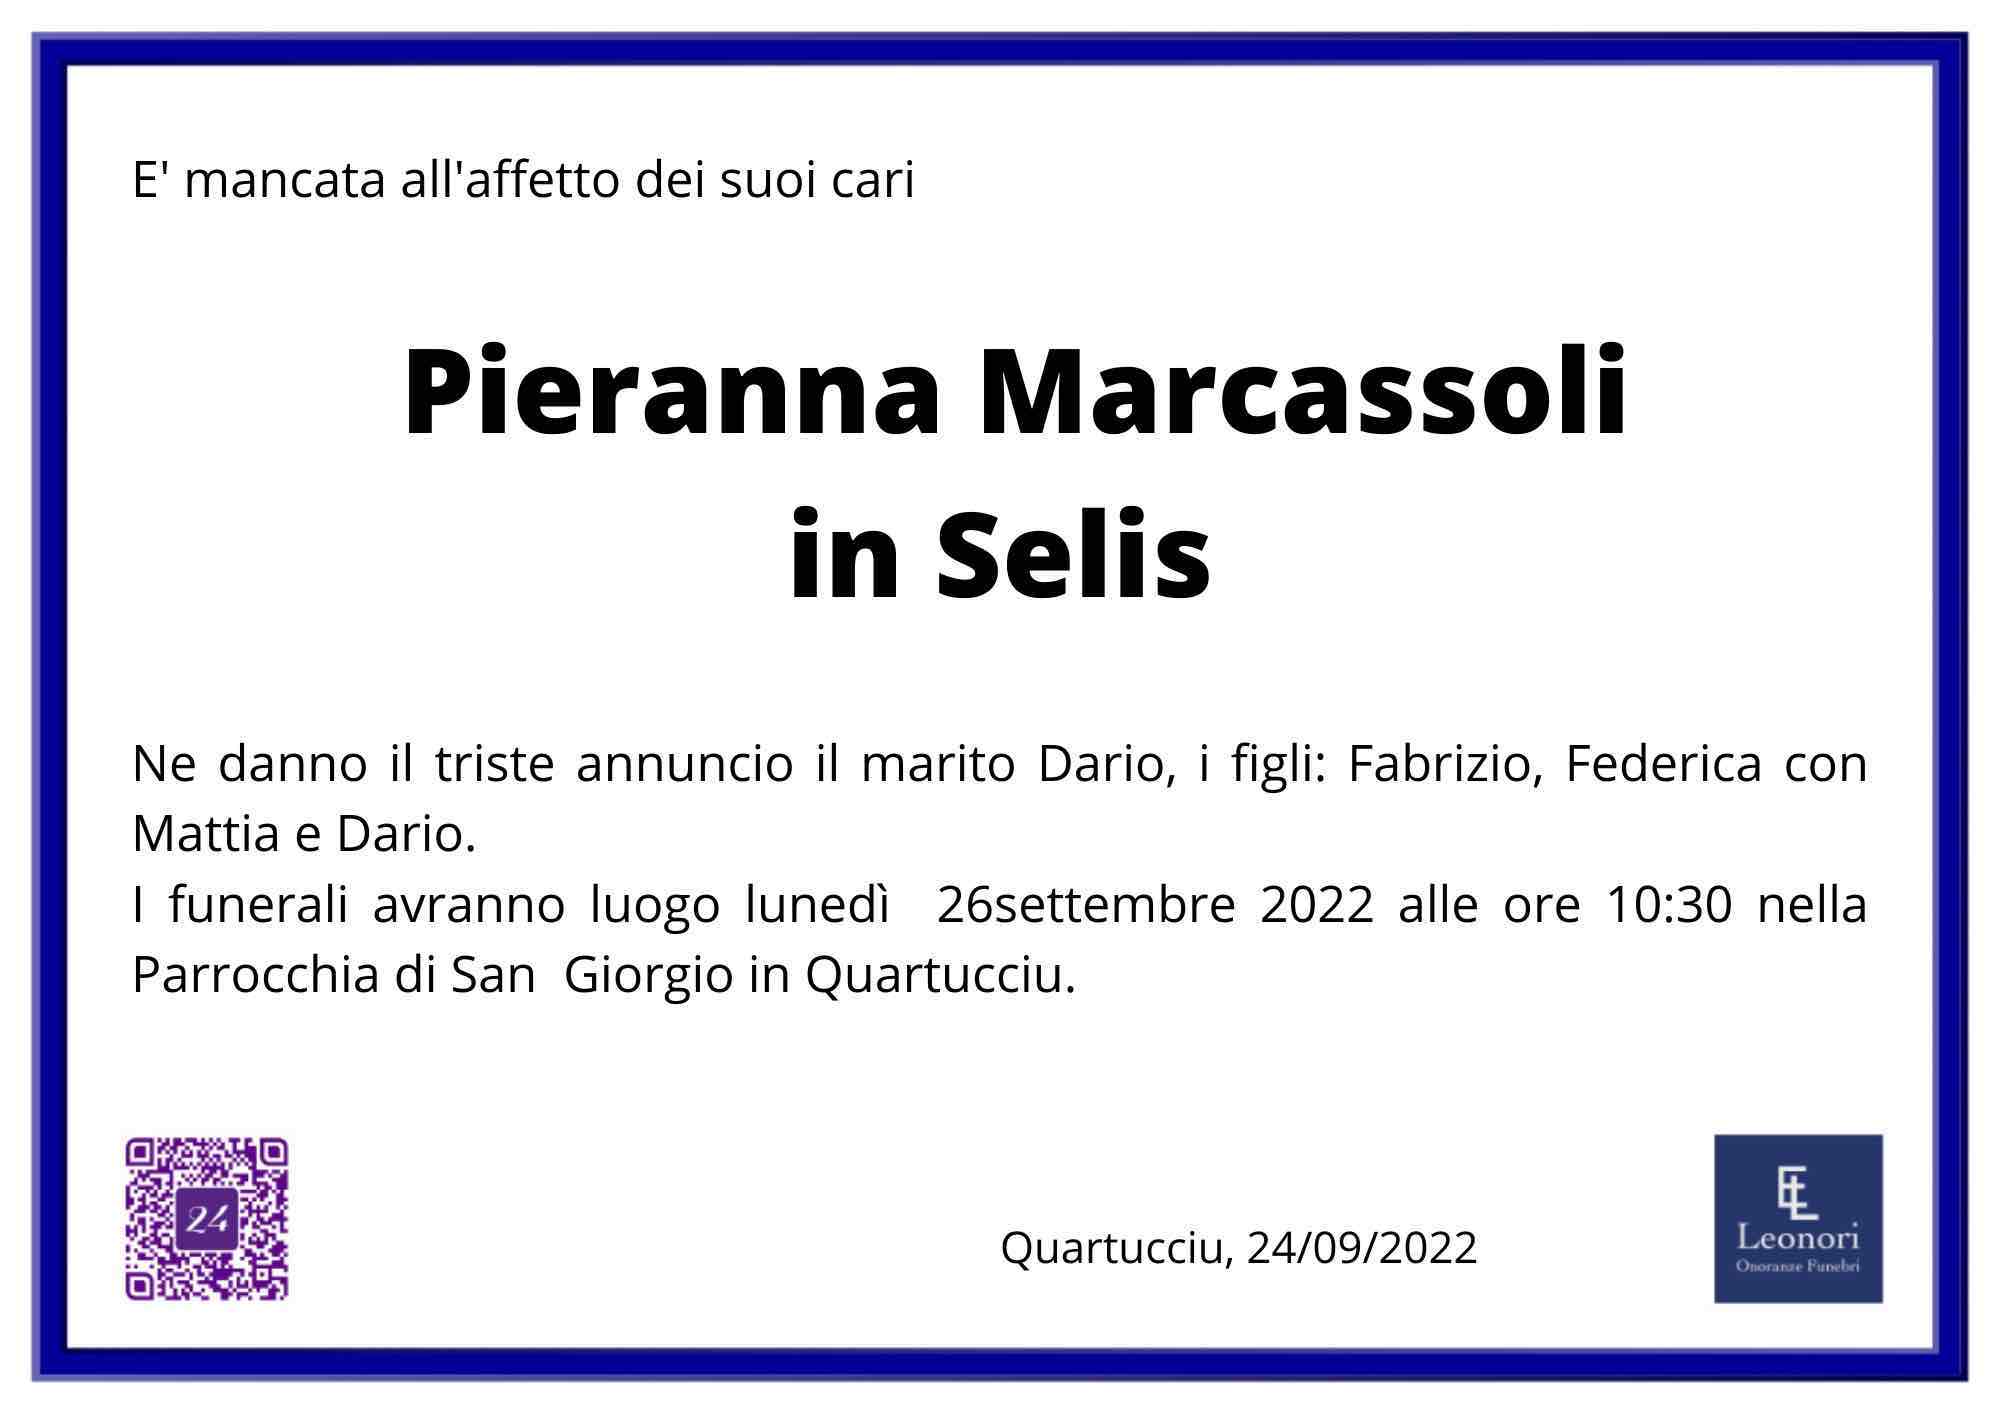 Pieranna Marcassoli